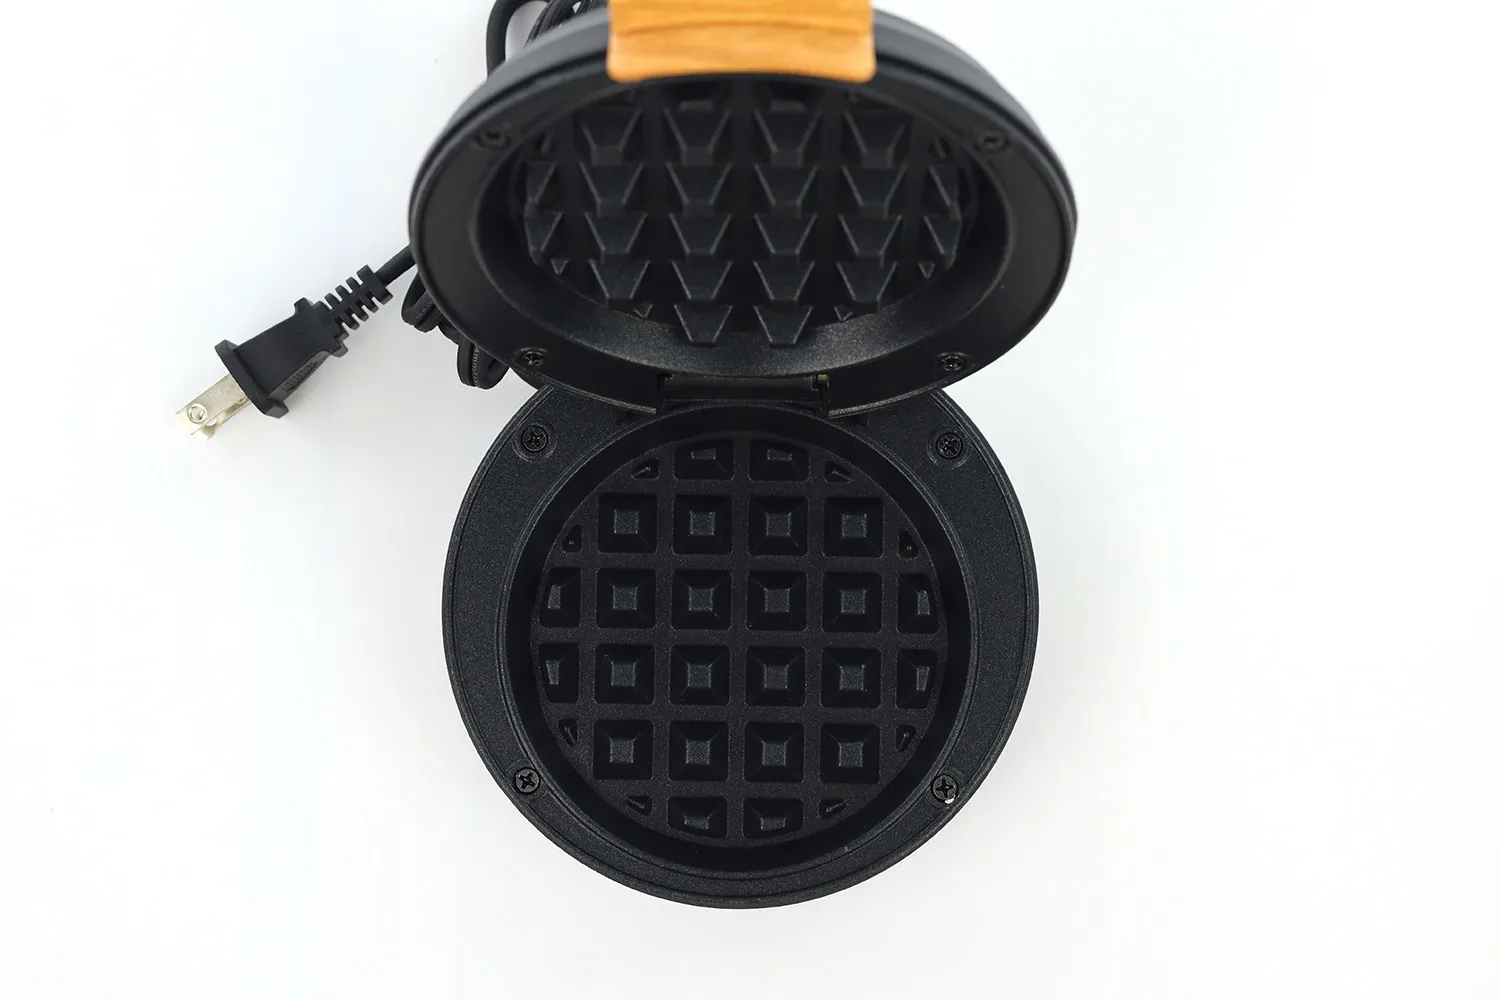 CROWNFUL 4 Inches Mini Waffle Maker – Crownful